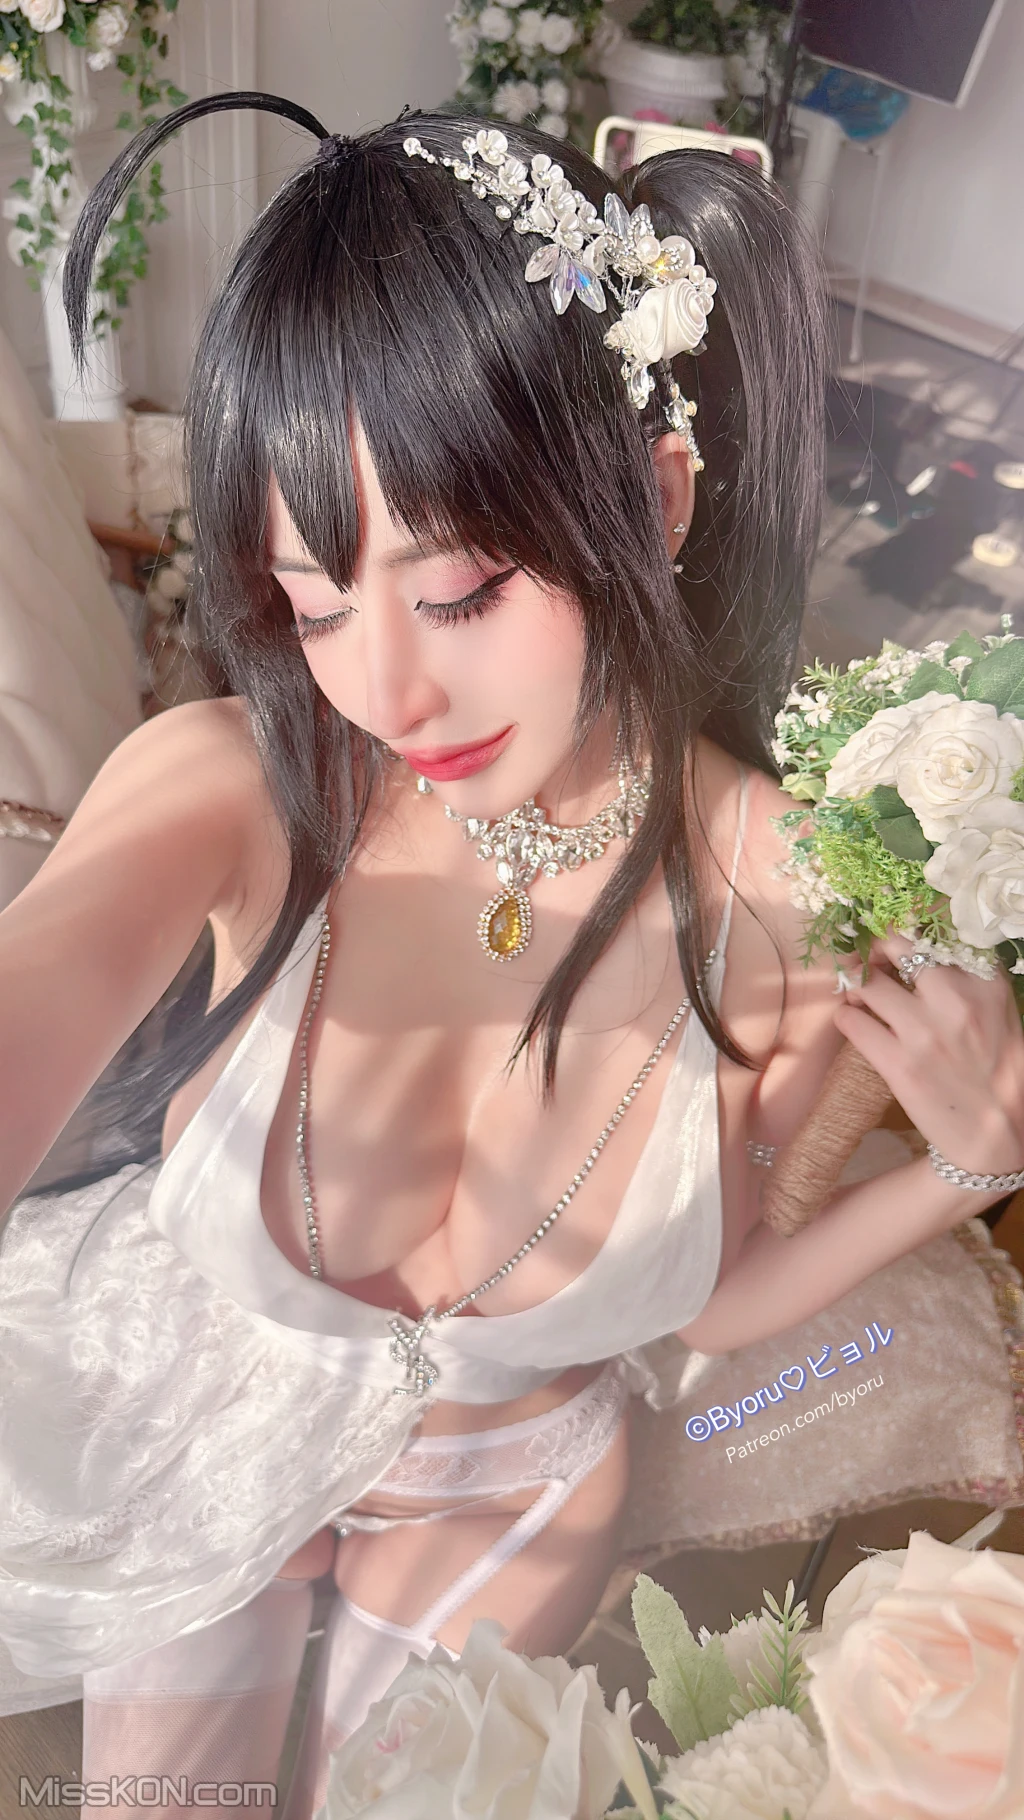 Coser@Byoru: Taihou Wedding Dress (52 ảnh )